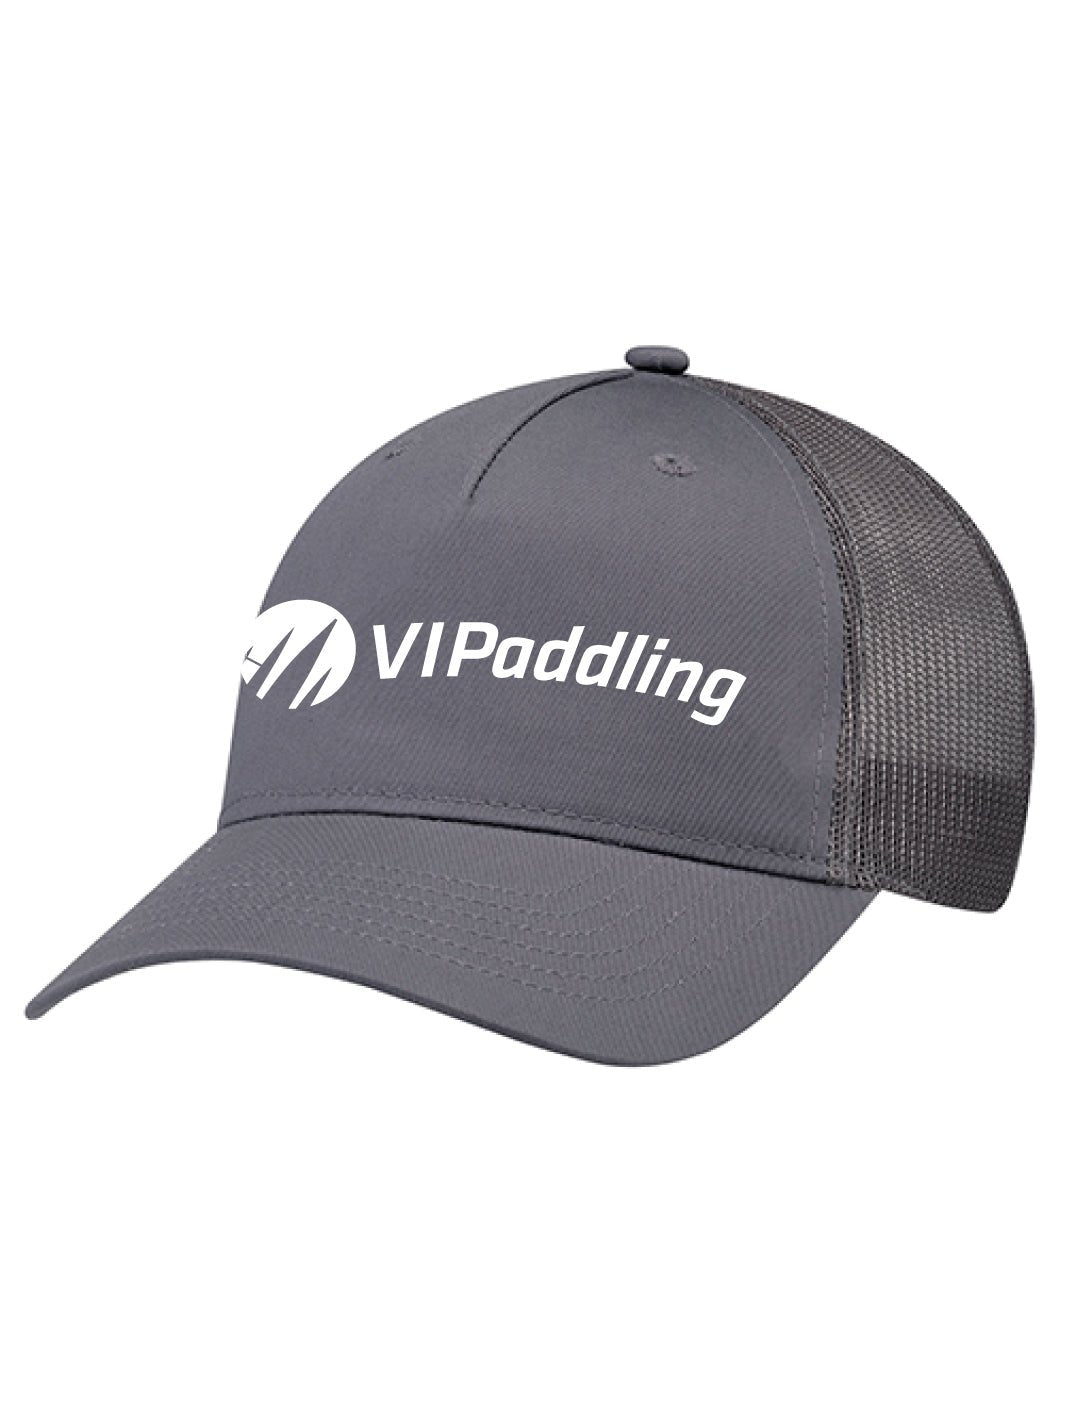 VI Paddling Baseball Hat - Oddball Workshop